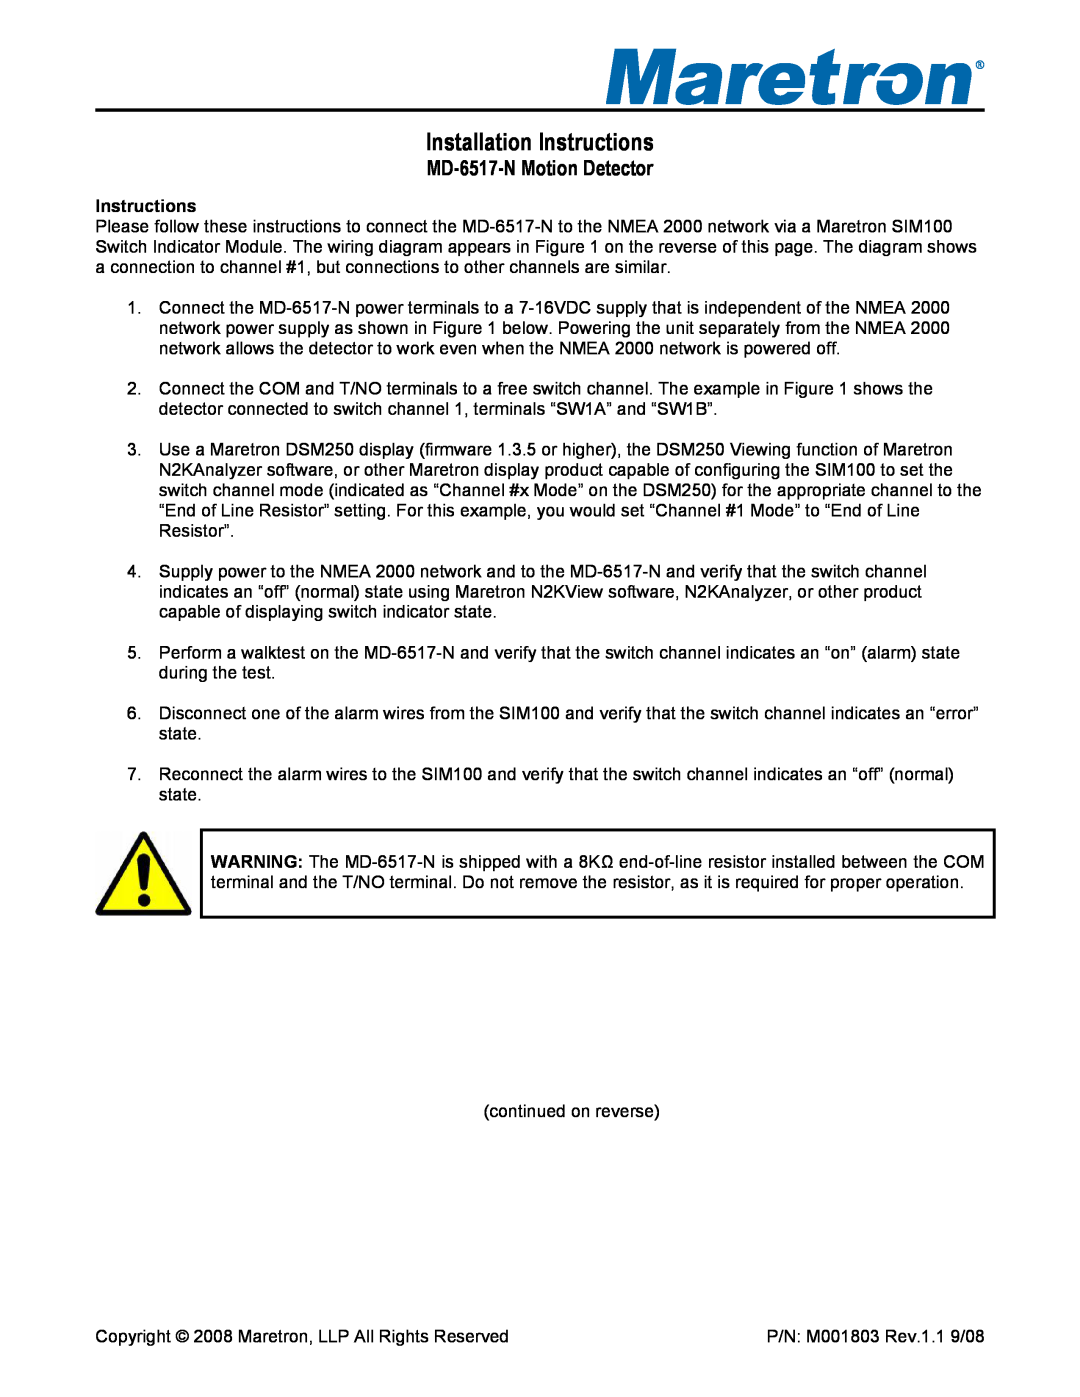 Maretron installation instructions MD-6517-NMotion Detector, Installation Instructions 